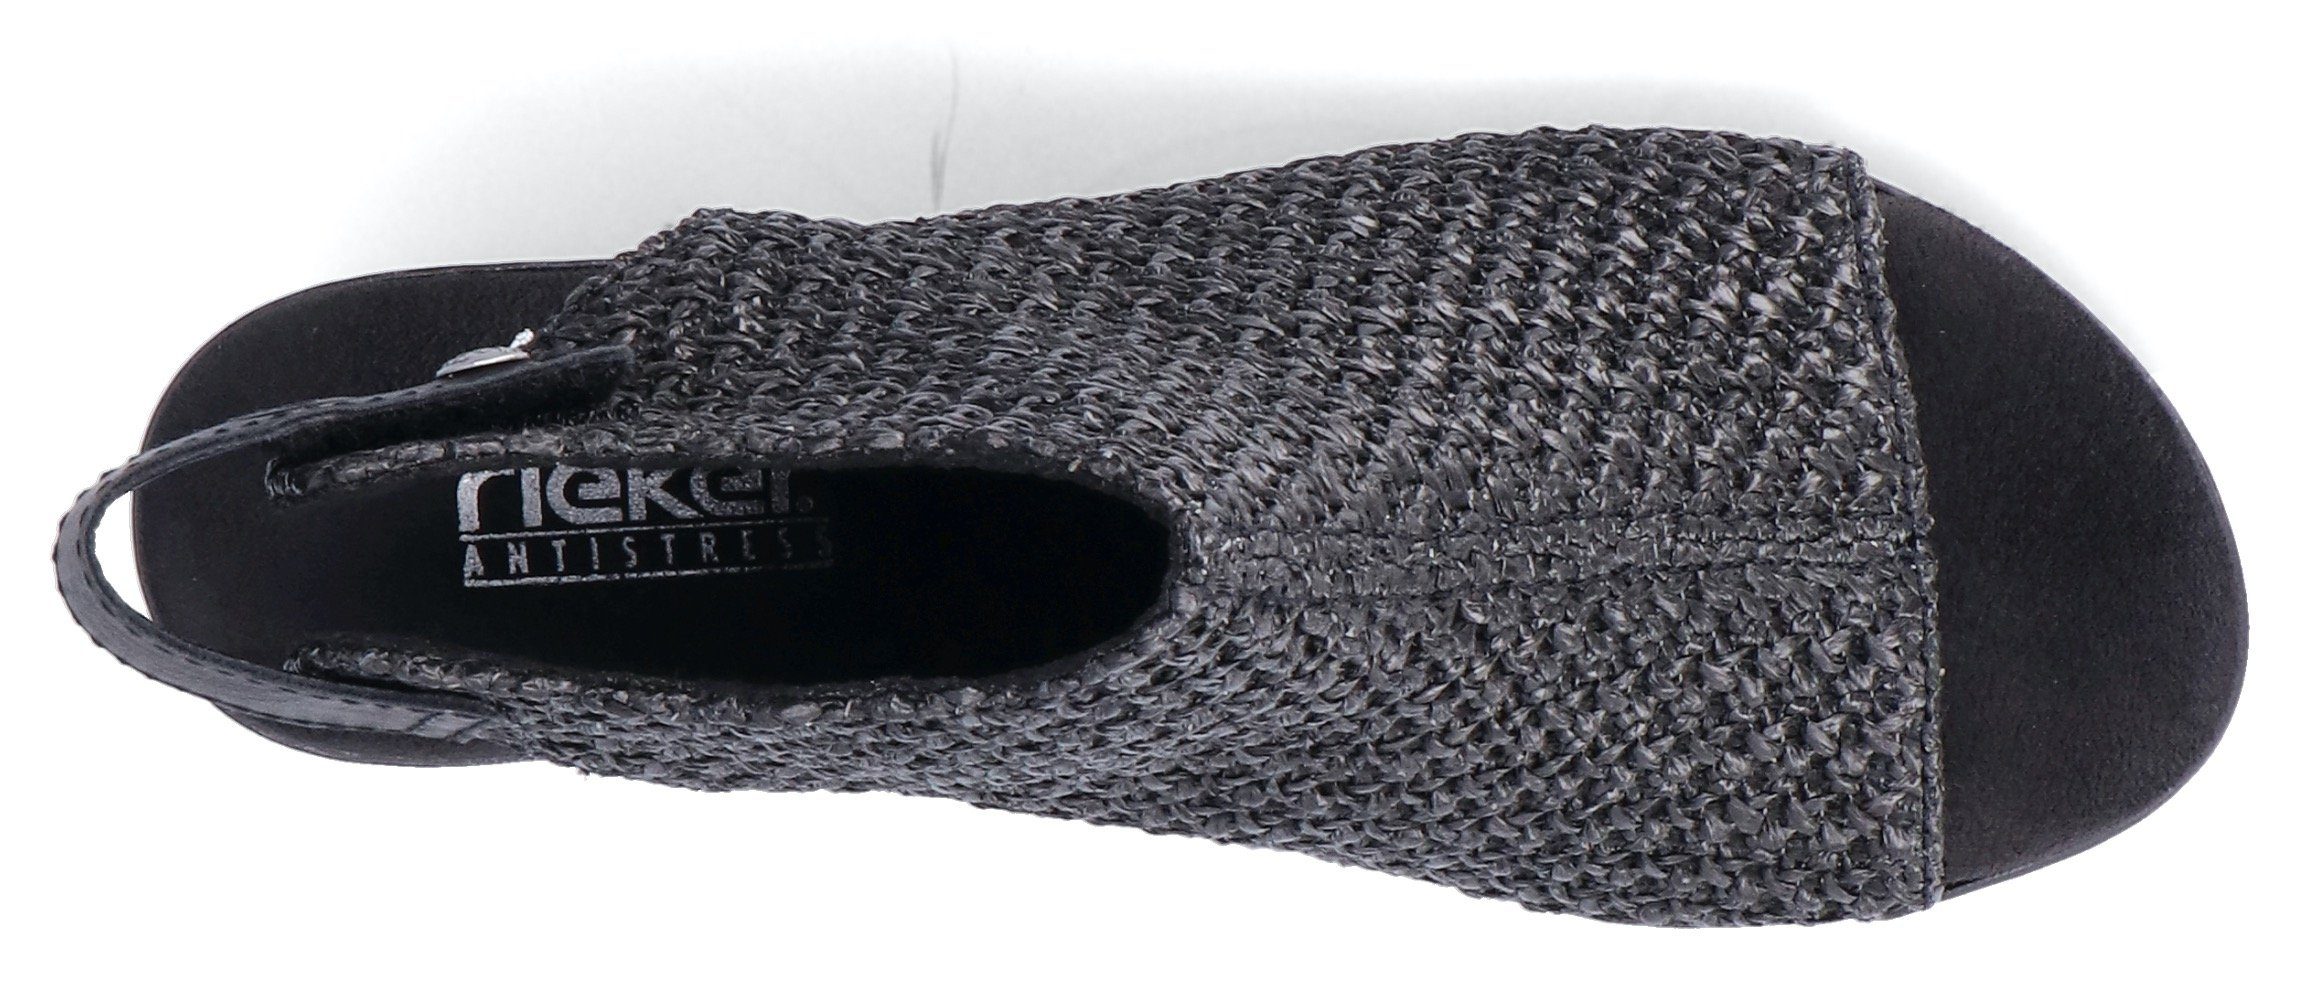 Rieker Sandalette in schwarz-black modischer Flecht-Optik